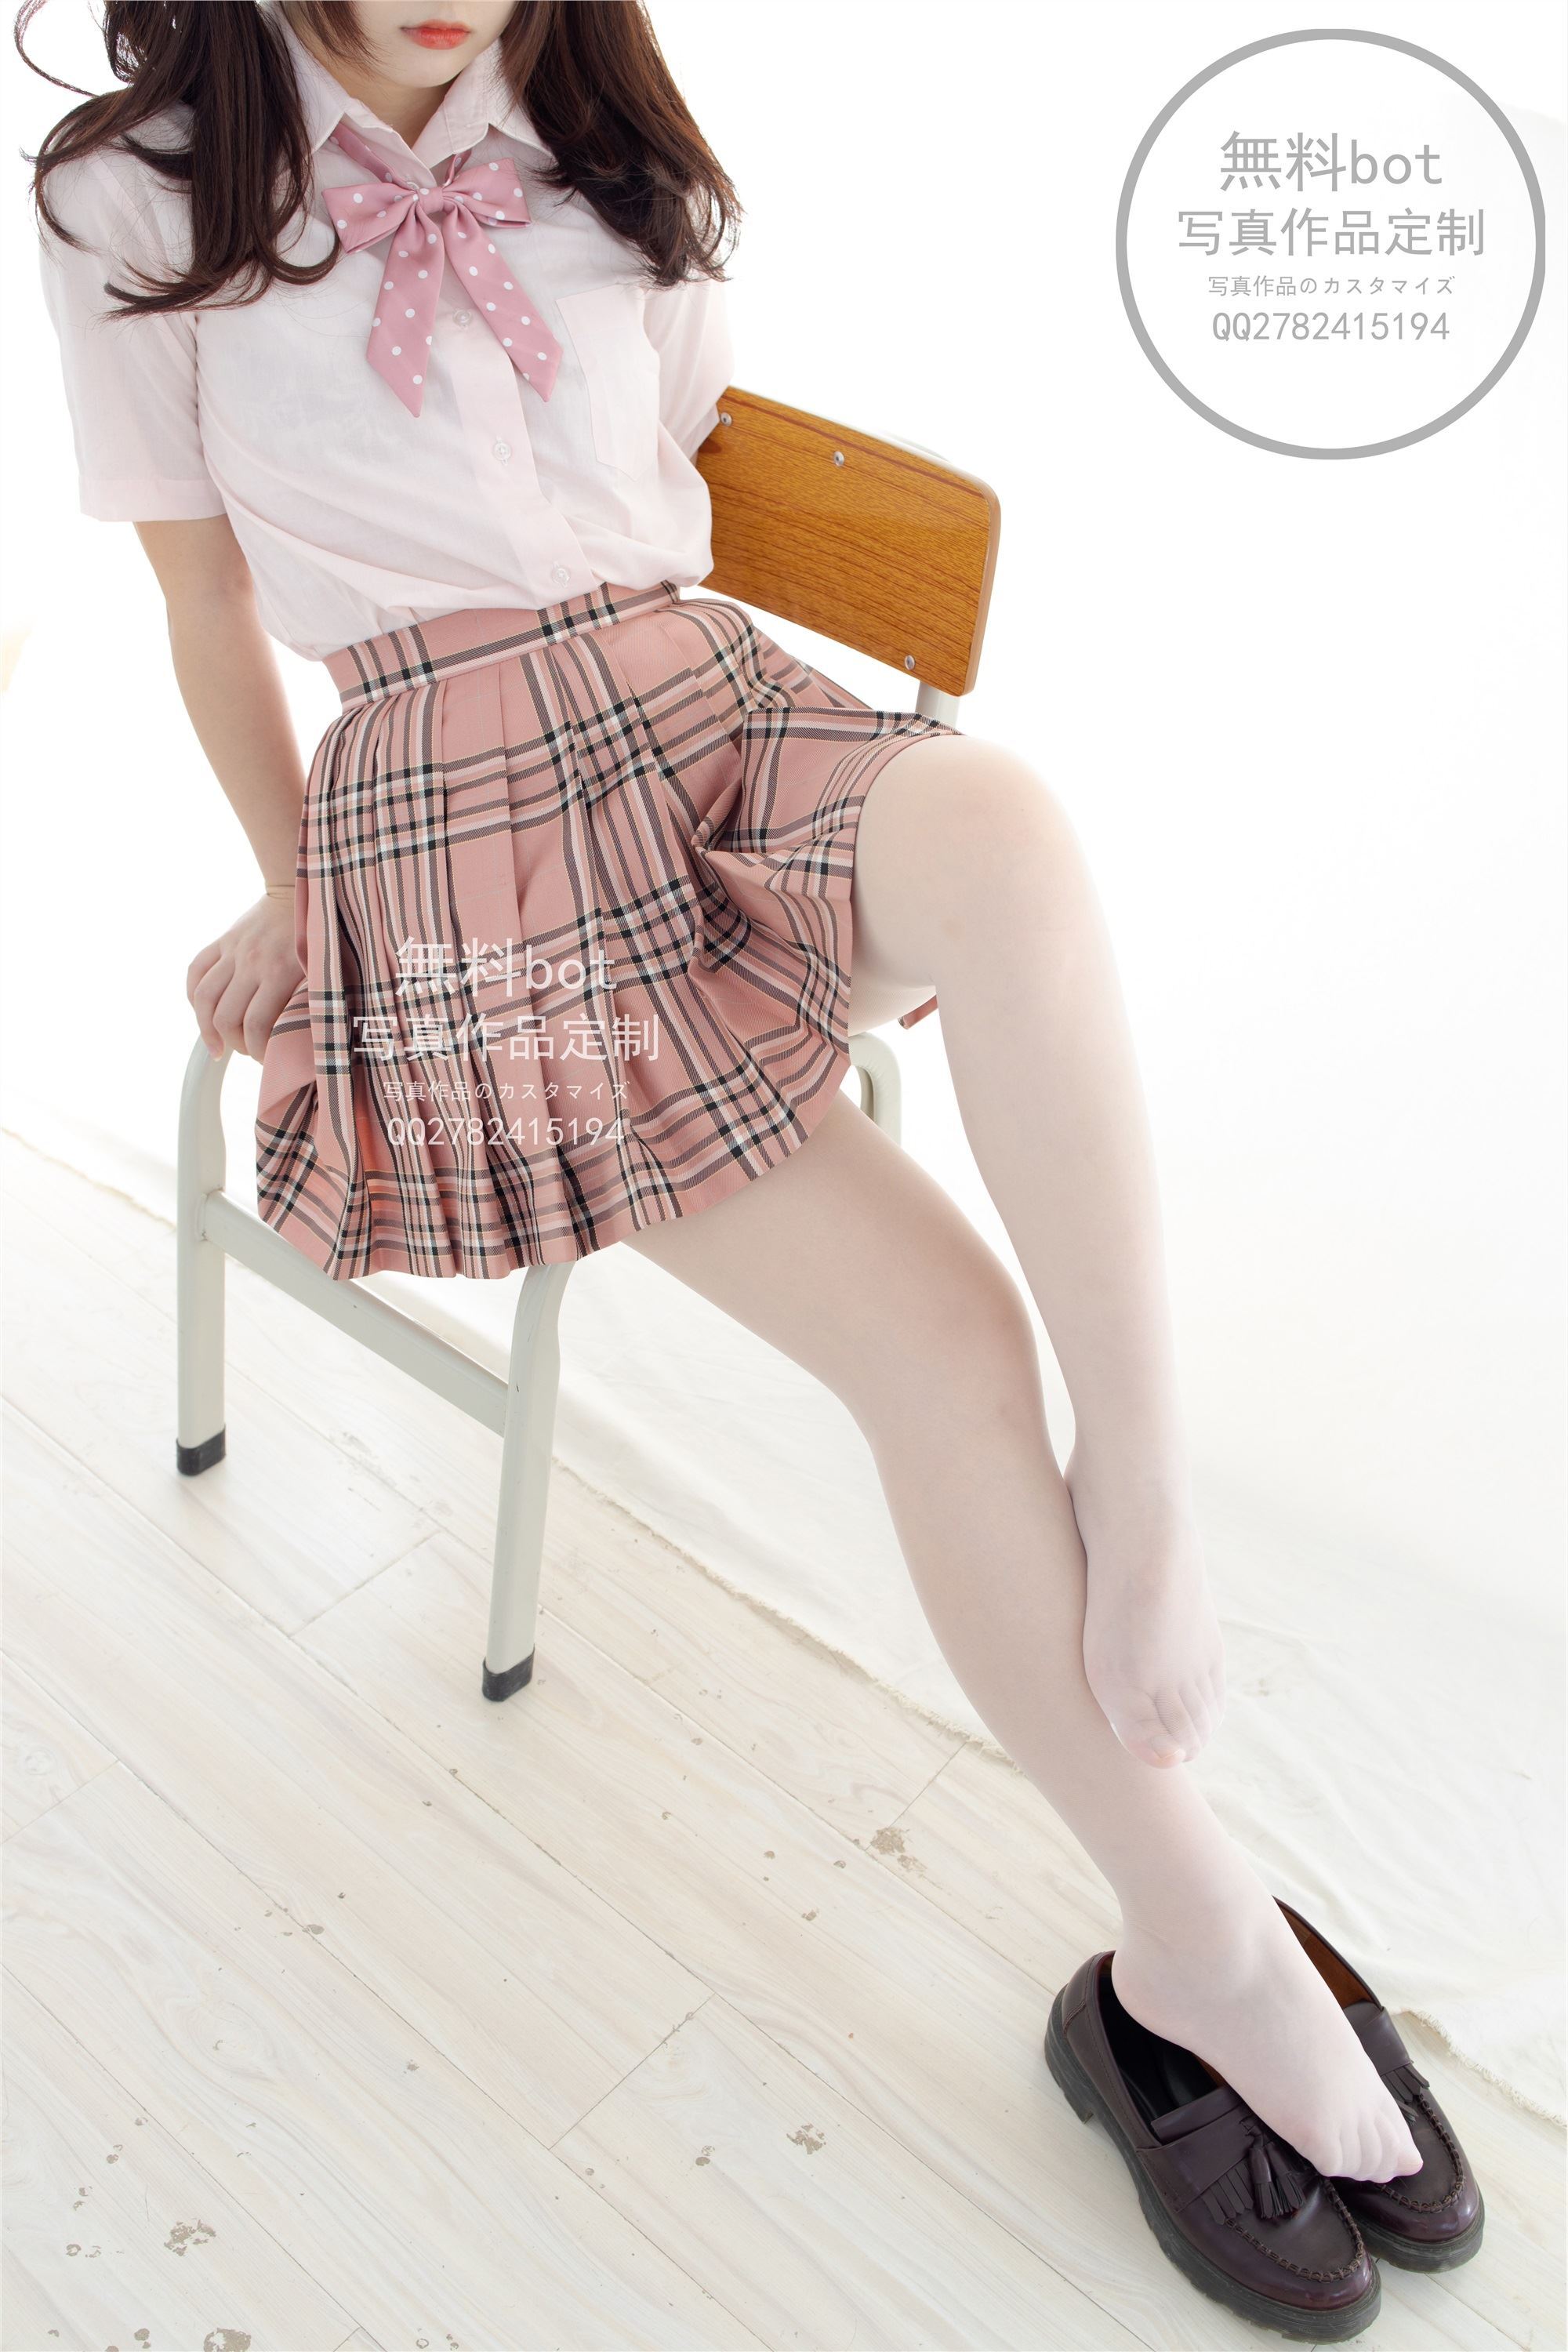 Rose foot photo of Senluo group no material-001 JK plaid skirt